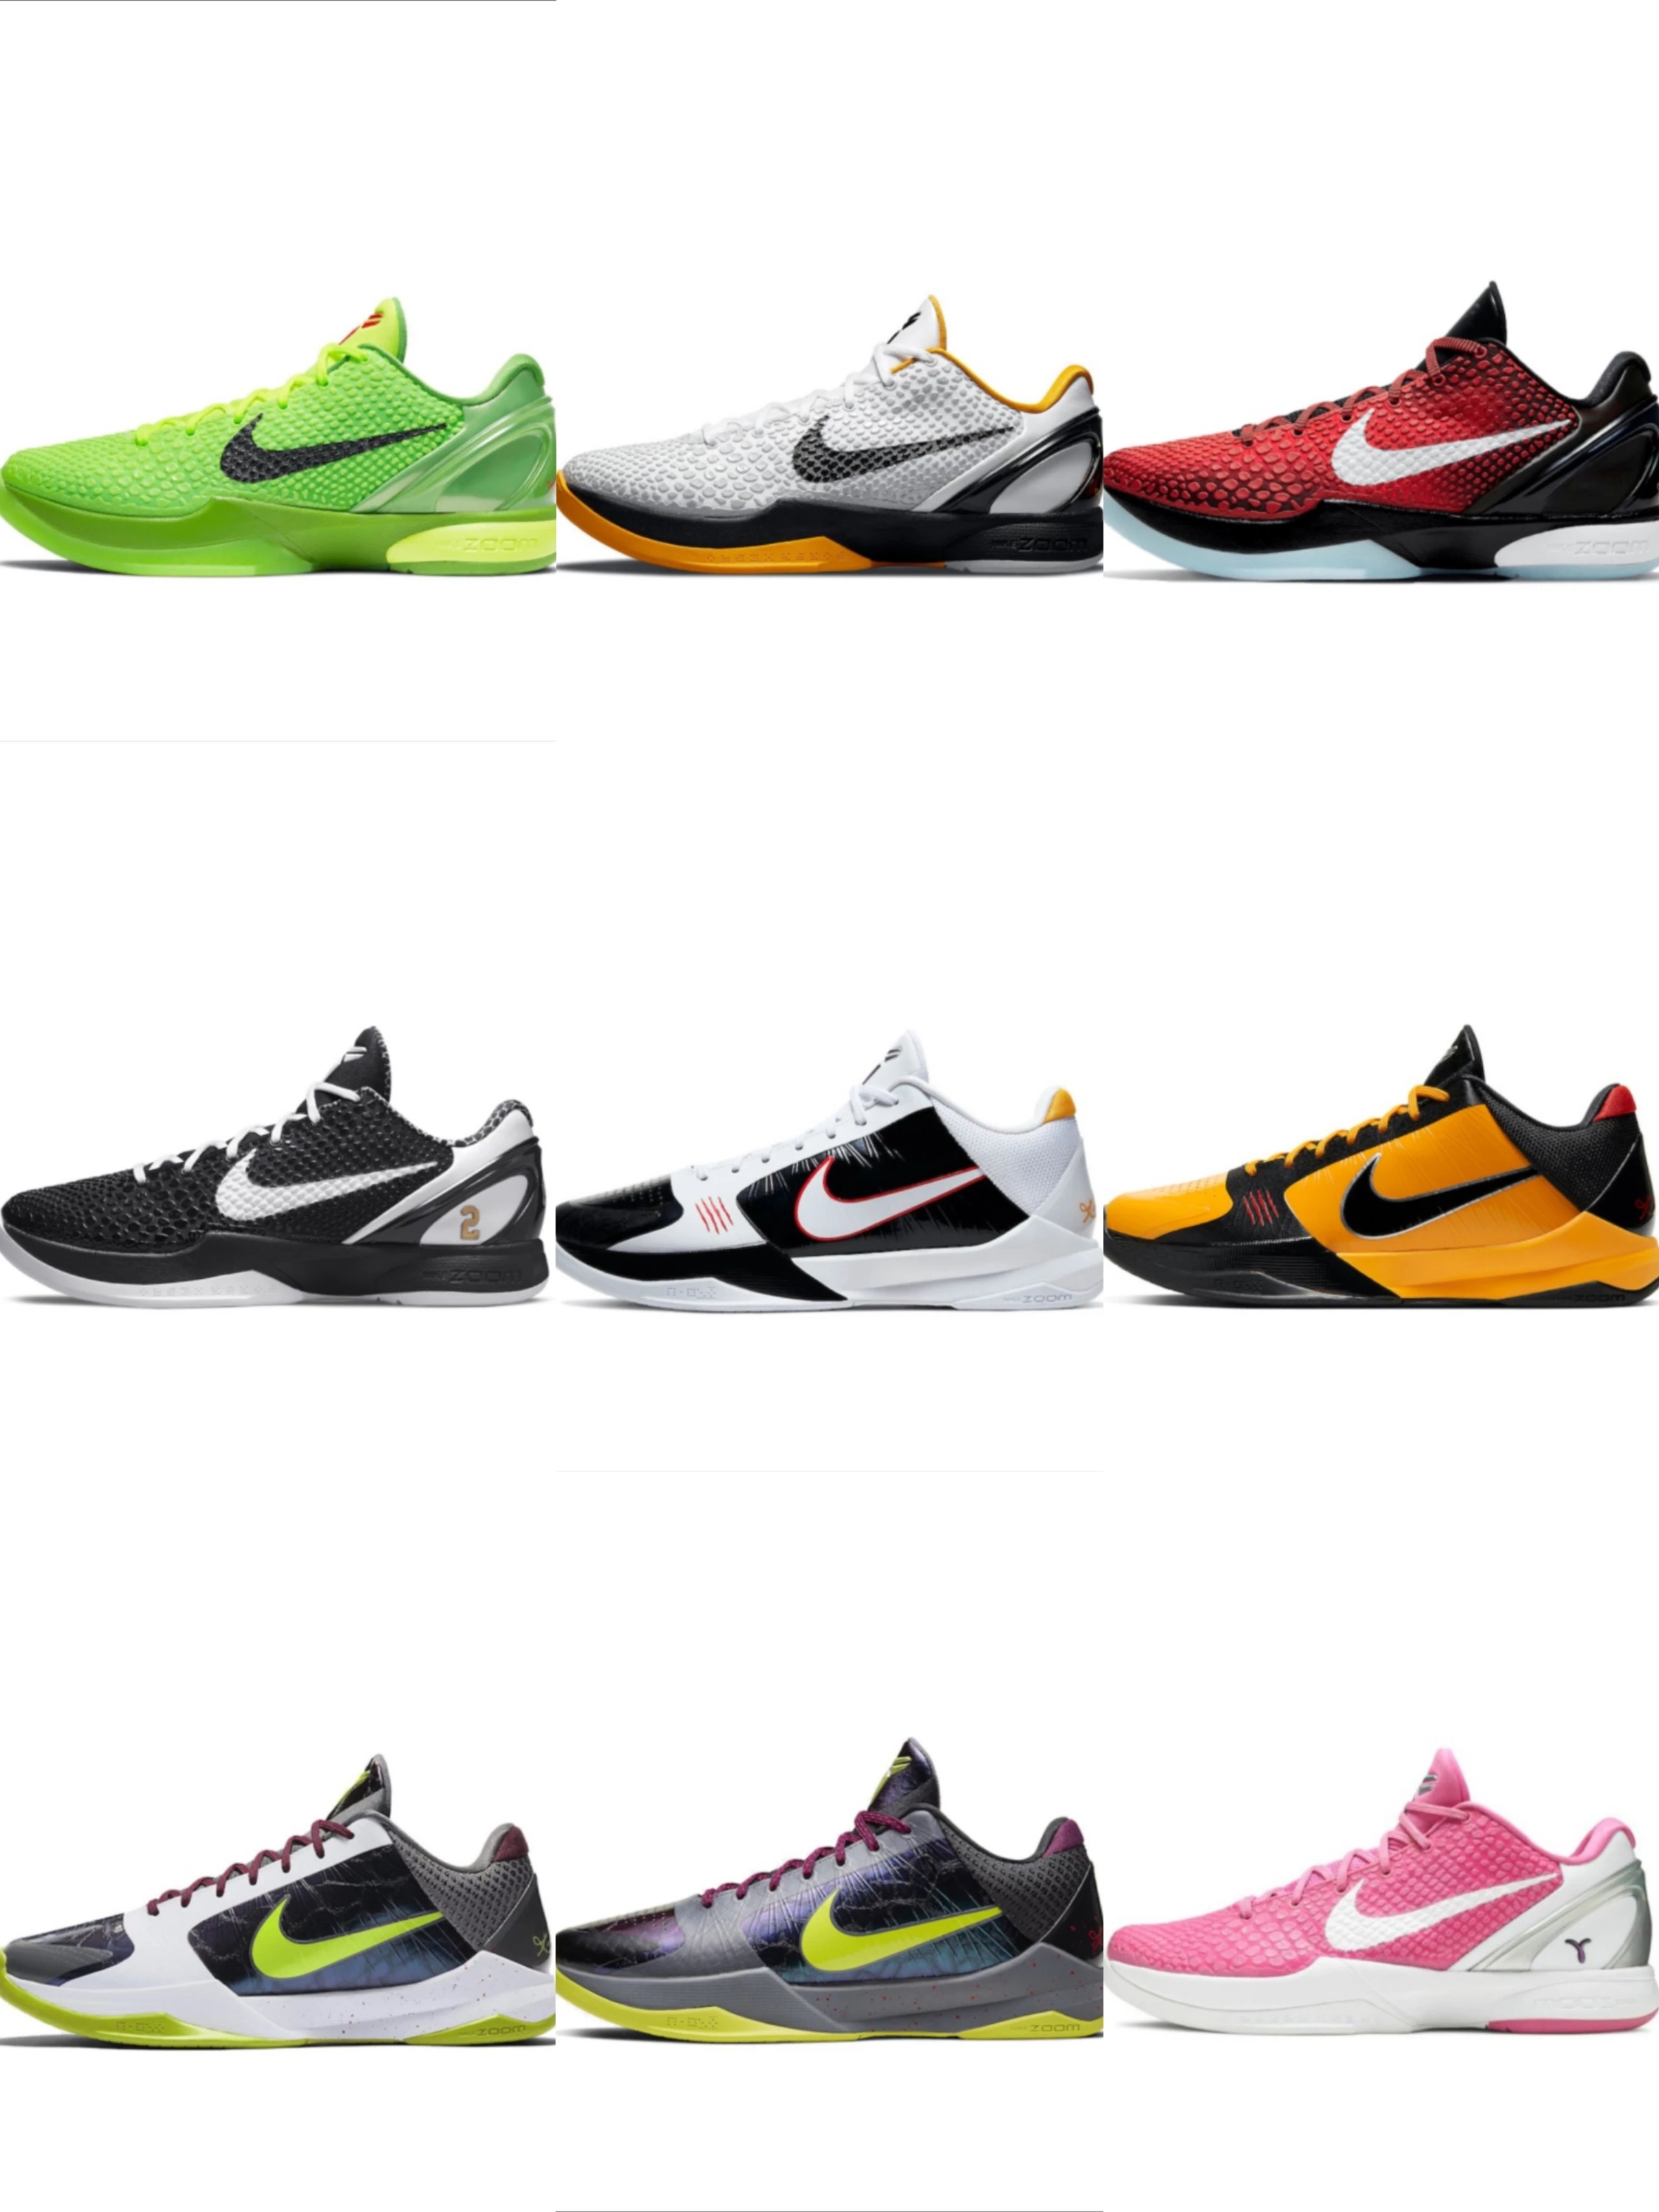 Item Thumbnail for S2 version Nike Kobe protro basketball shoe collection